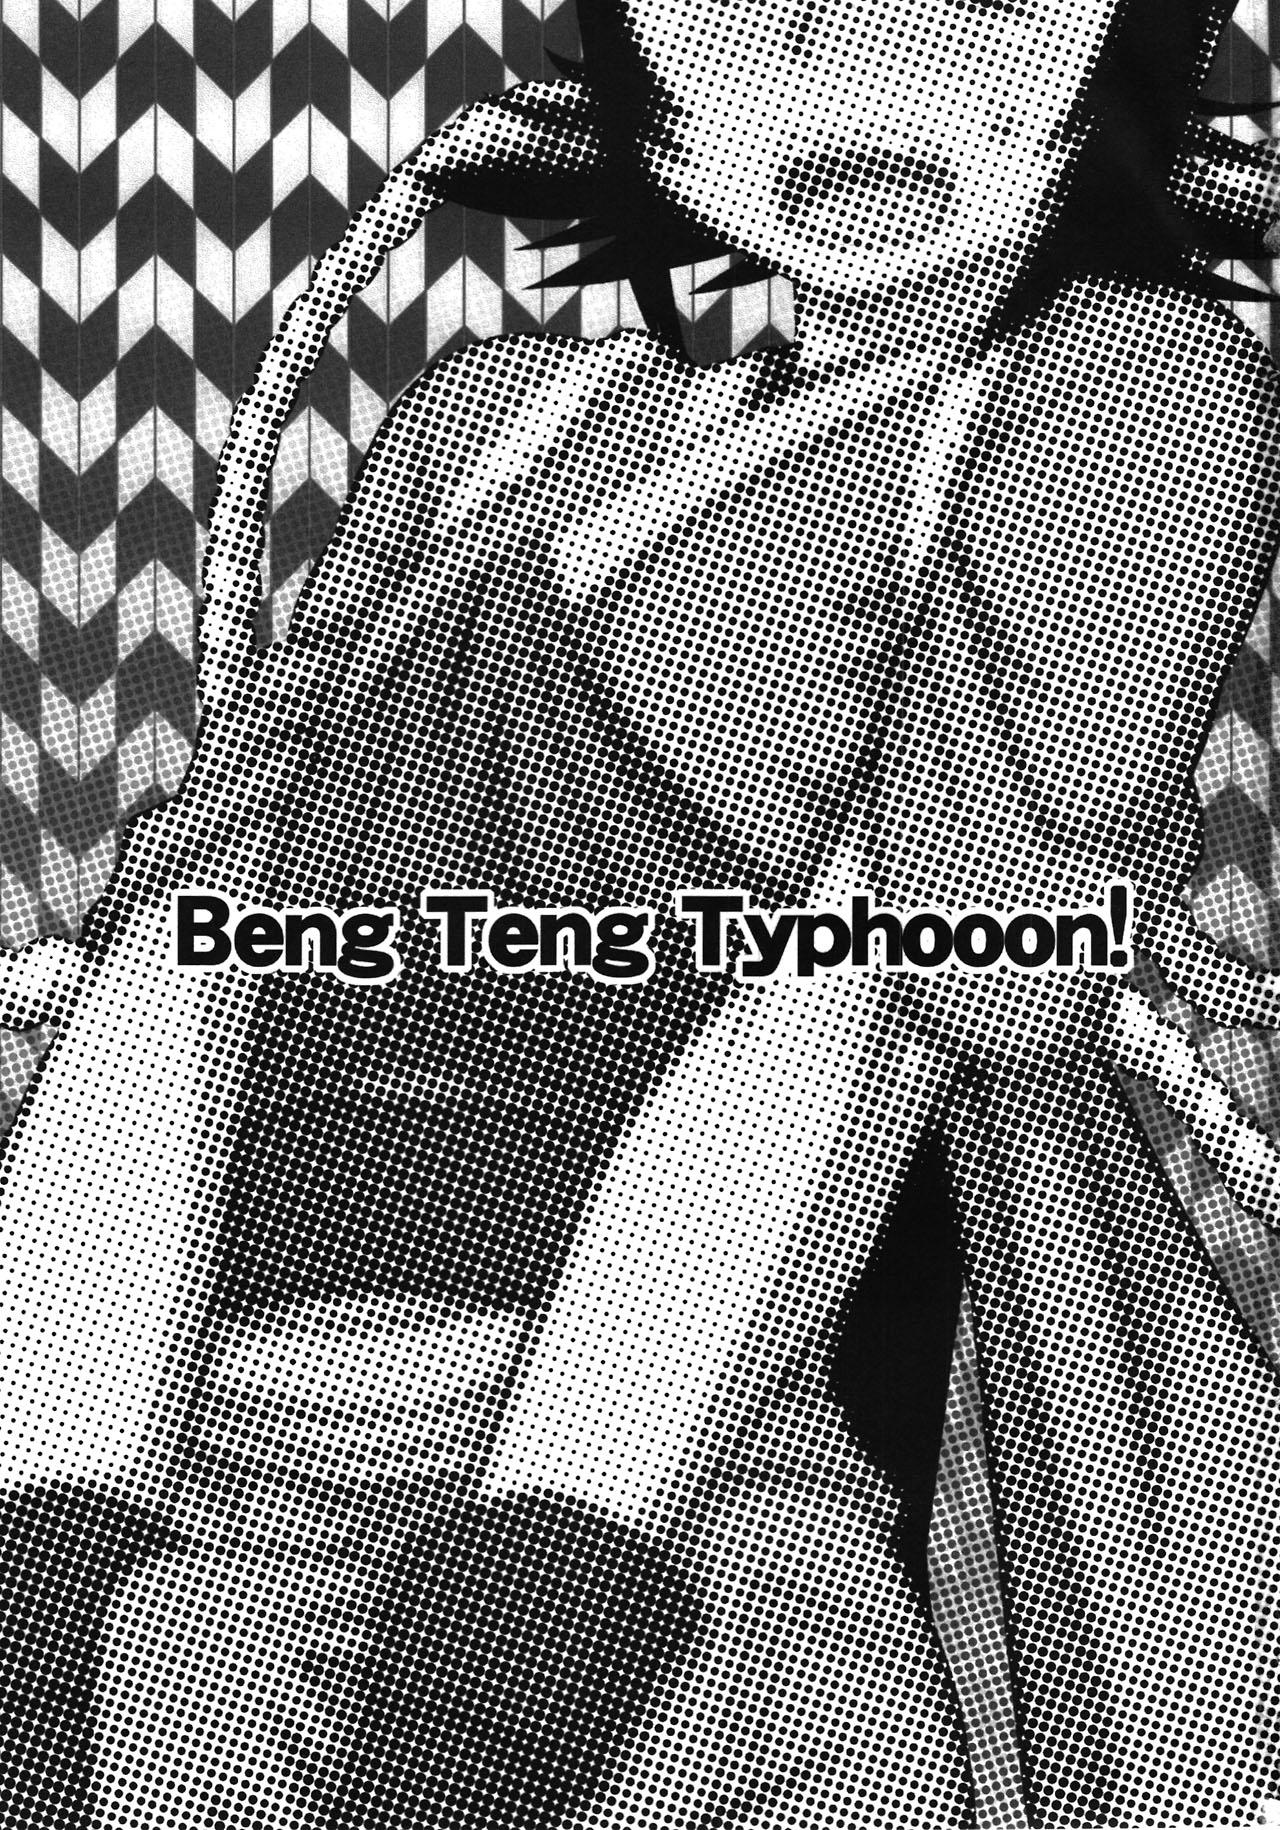 Amateur Porno Beng Teng Typhooon! - Rurouni kenshin Sfm - Page 3